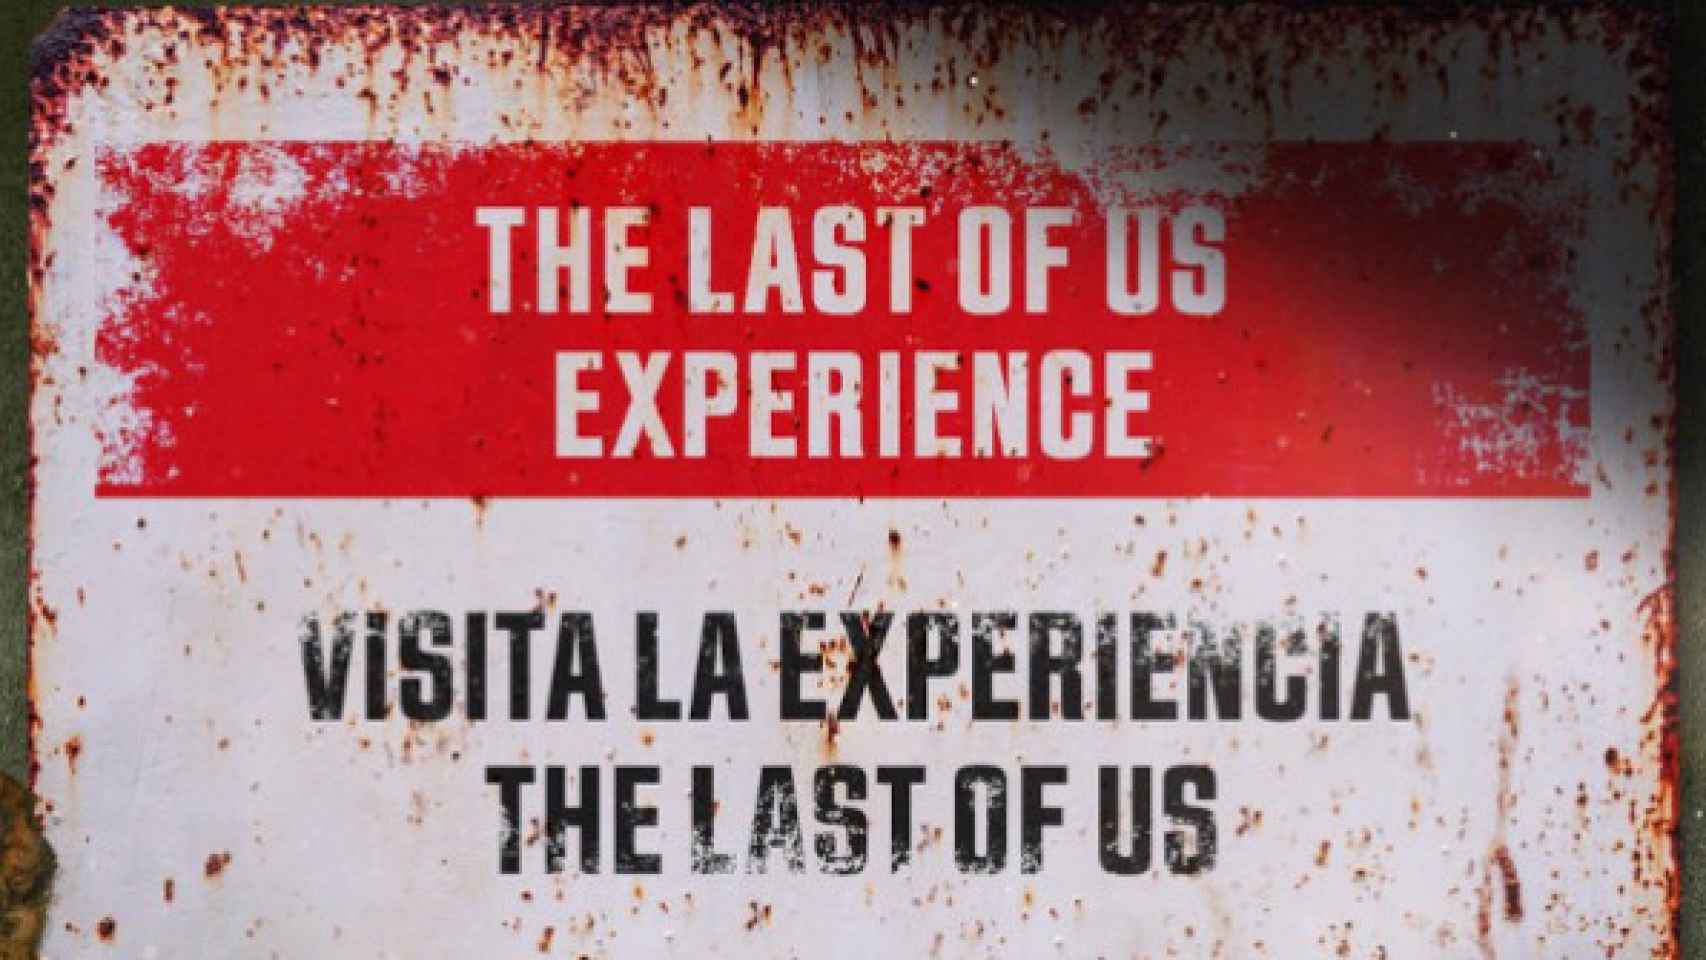 Experiencia The Last of Us.